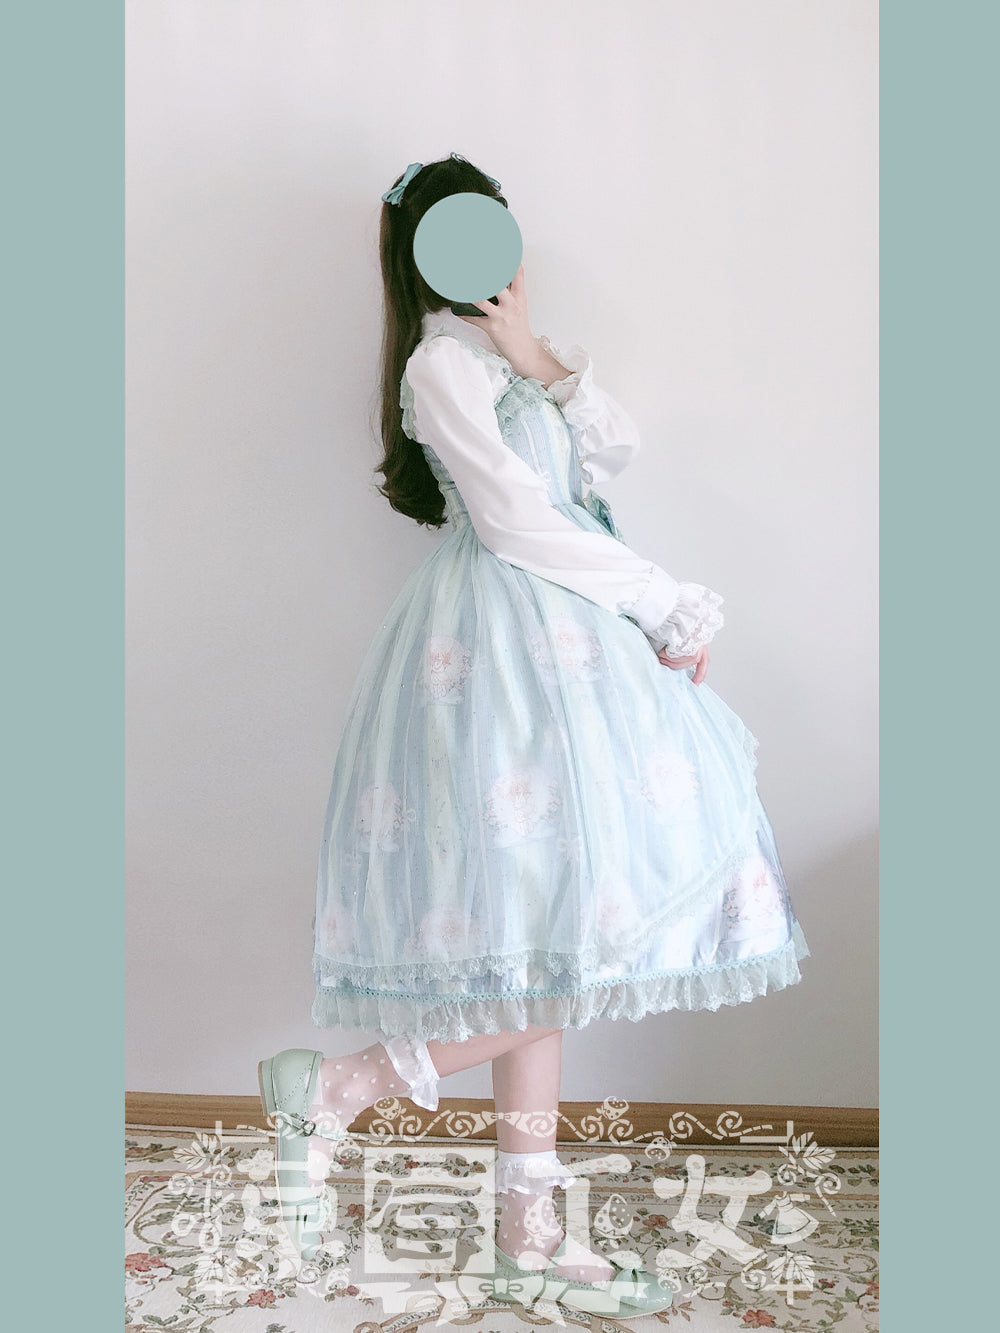 JSK Dress♥Ready to Ship♥The Little Angel Singing Blessing Poem♥Sweet Lolita Dress